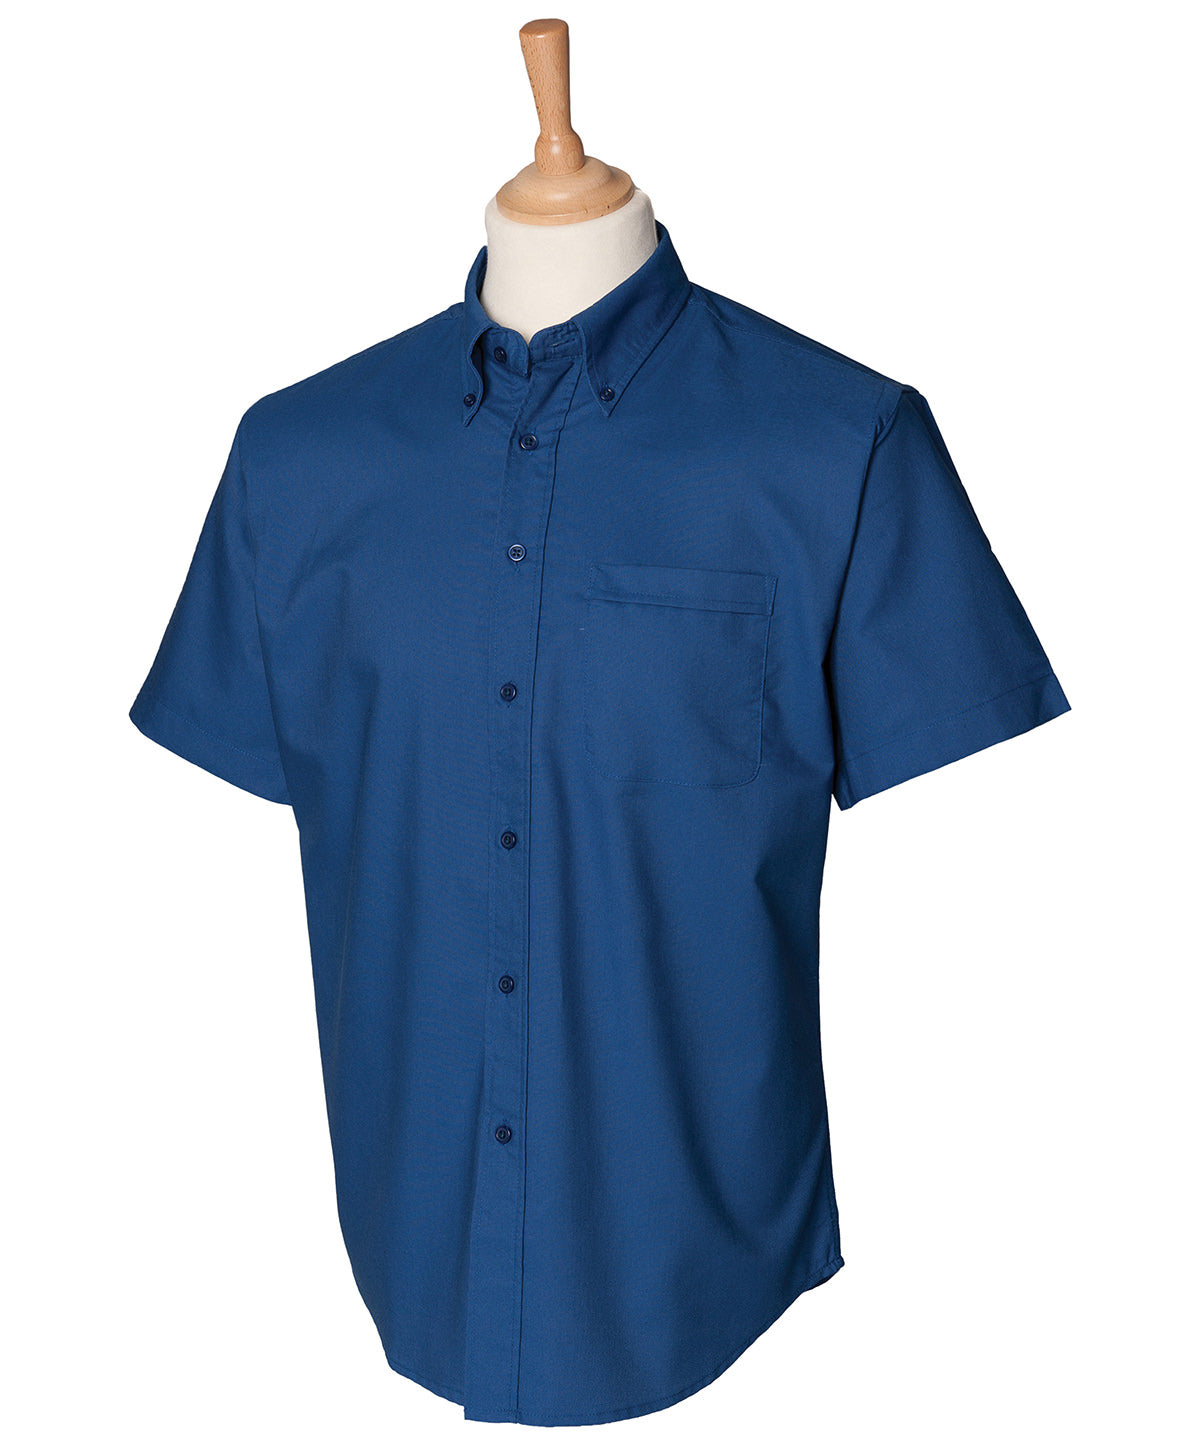 Personalised Shirts - Light Blue Henbury Short sleeve classic Oxford shirt